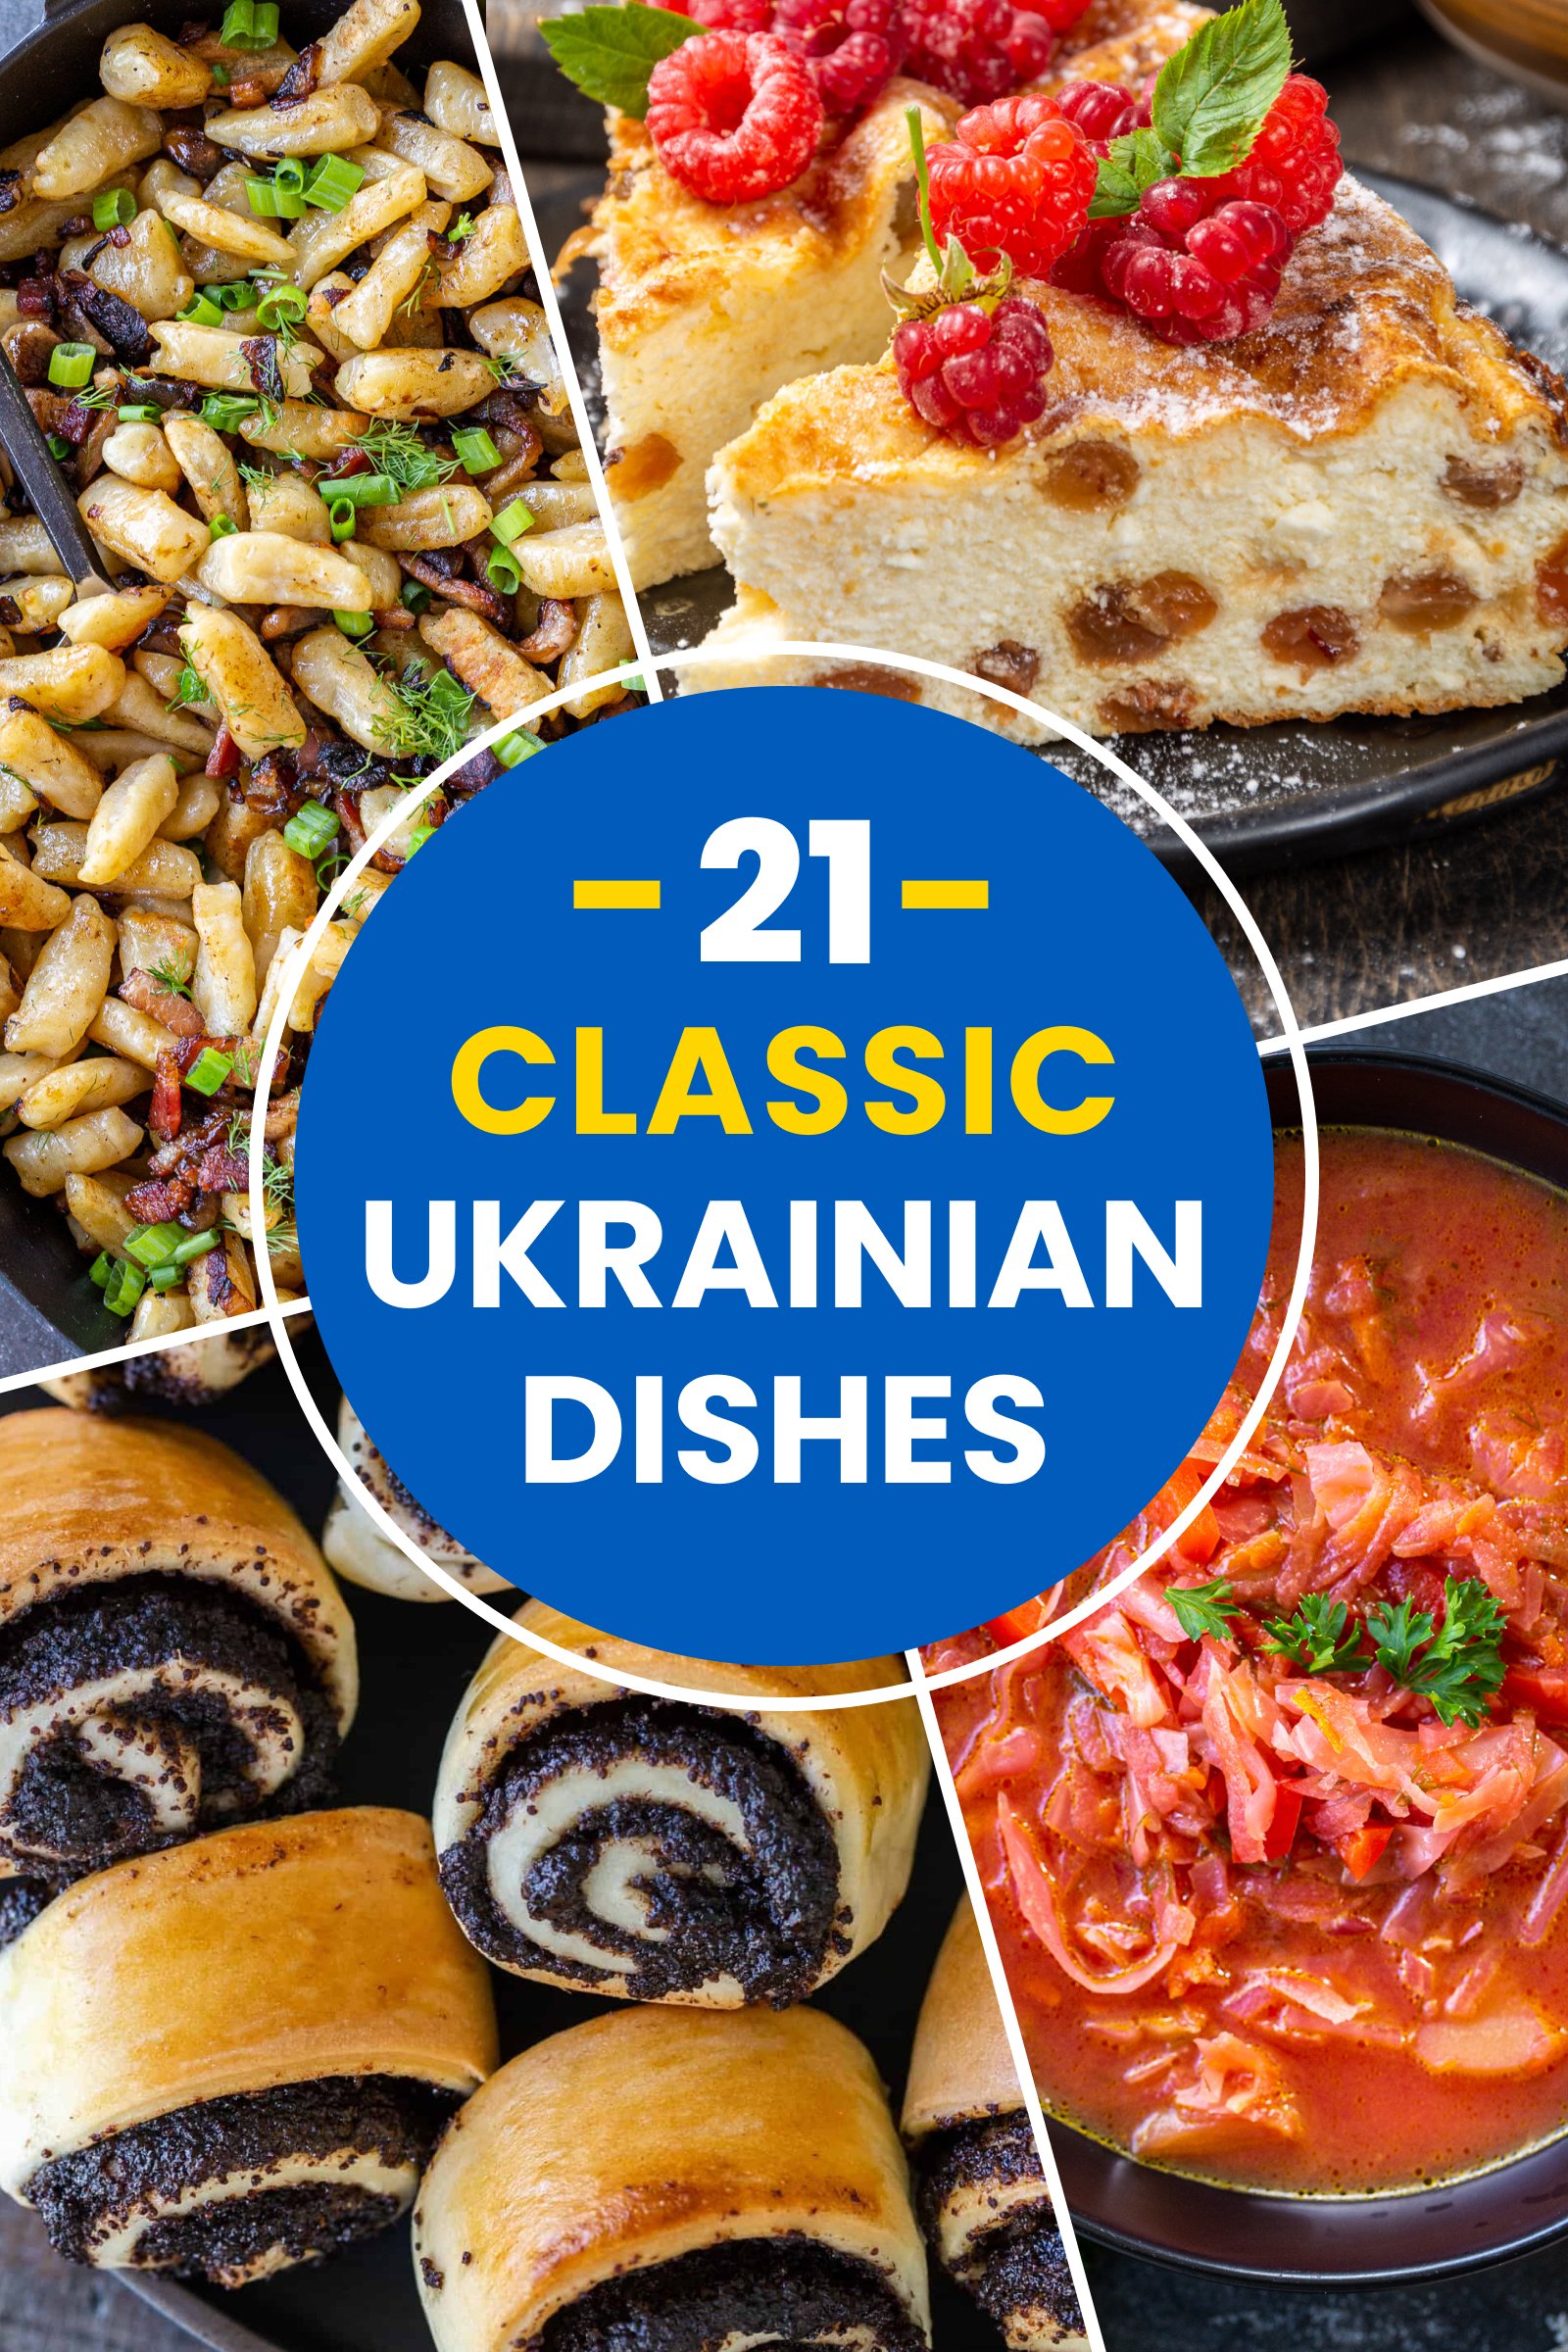 21 Classic Ukrainian Dishes2 